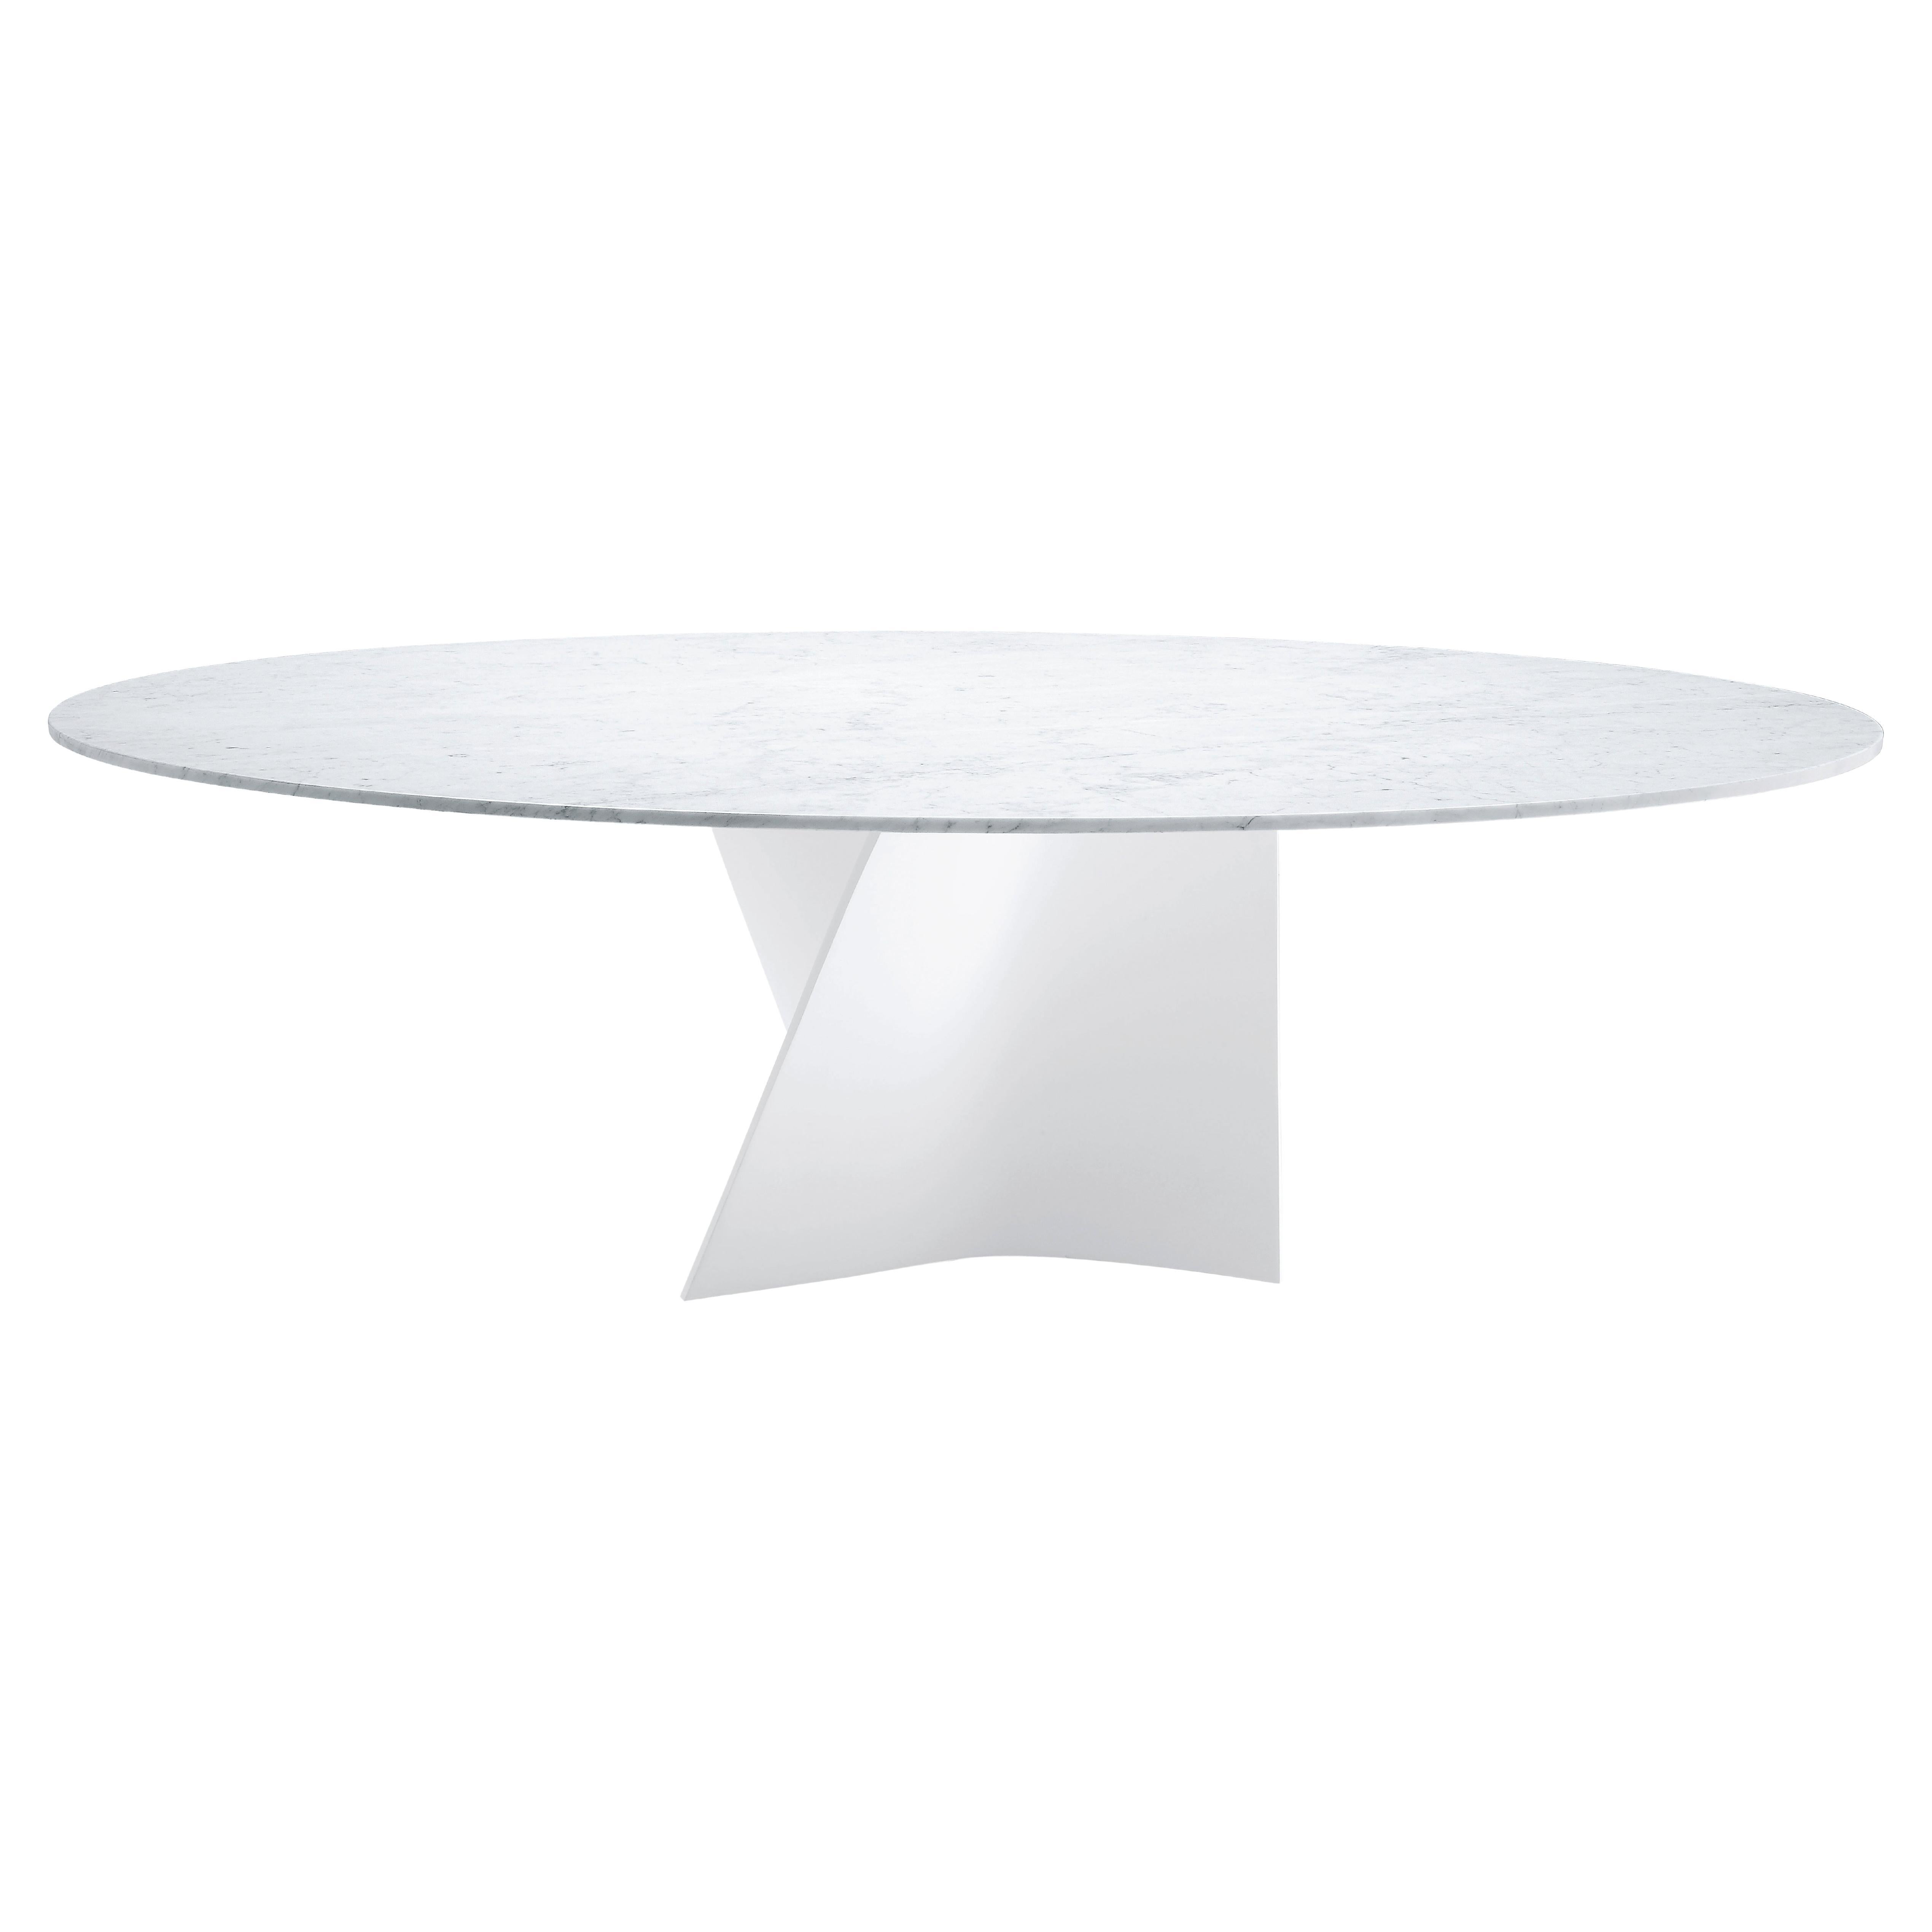 Petite table Zanotta Elica avec plateau en marbre de Carrare et cadre blanc par Prospero Rasulo